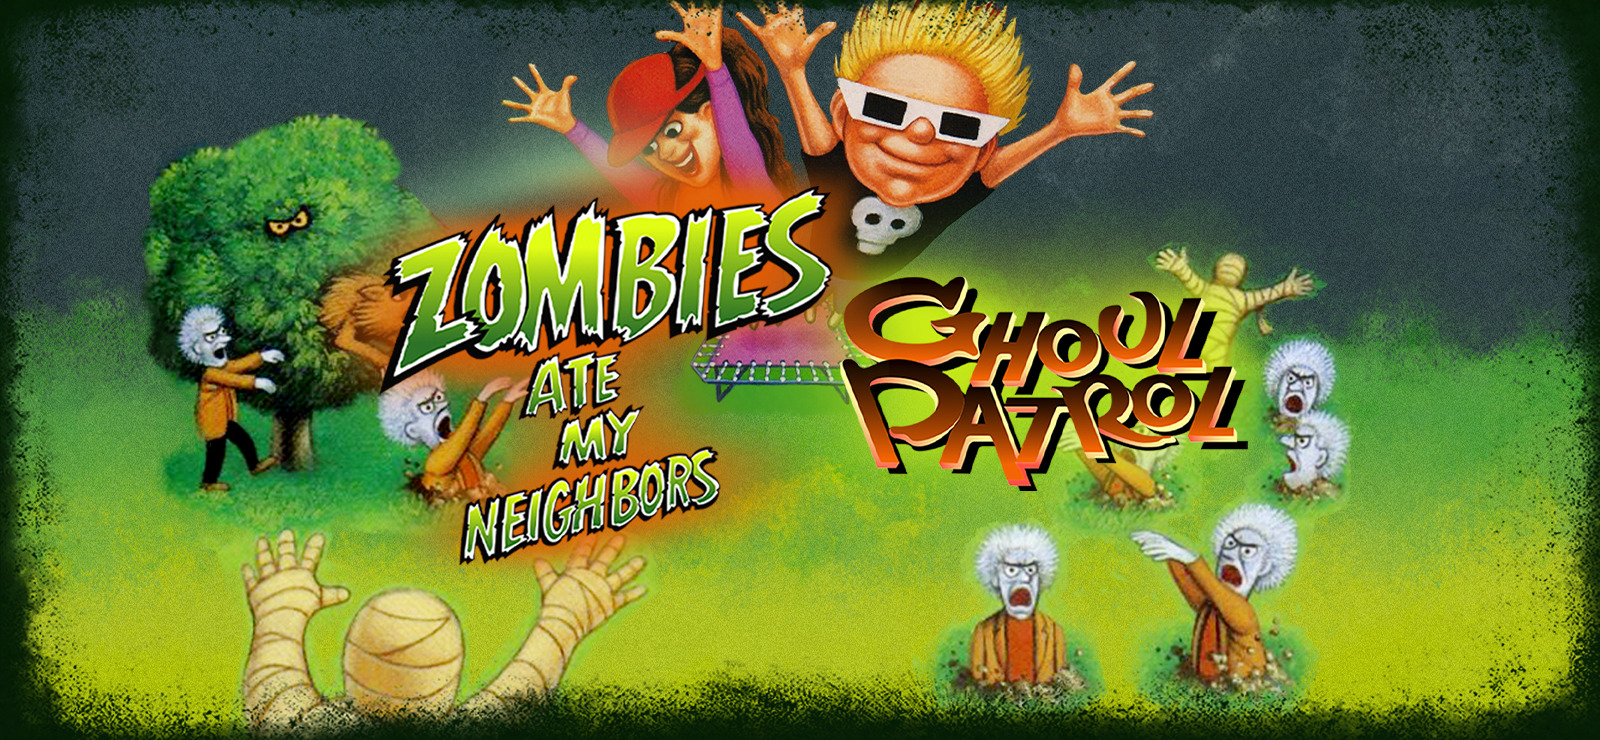 Zombies Ate My Neighbors - IGN